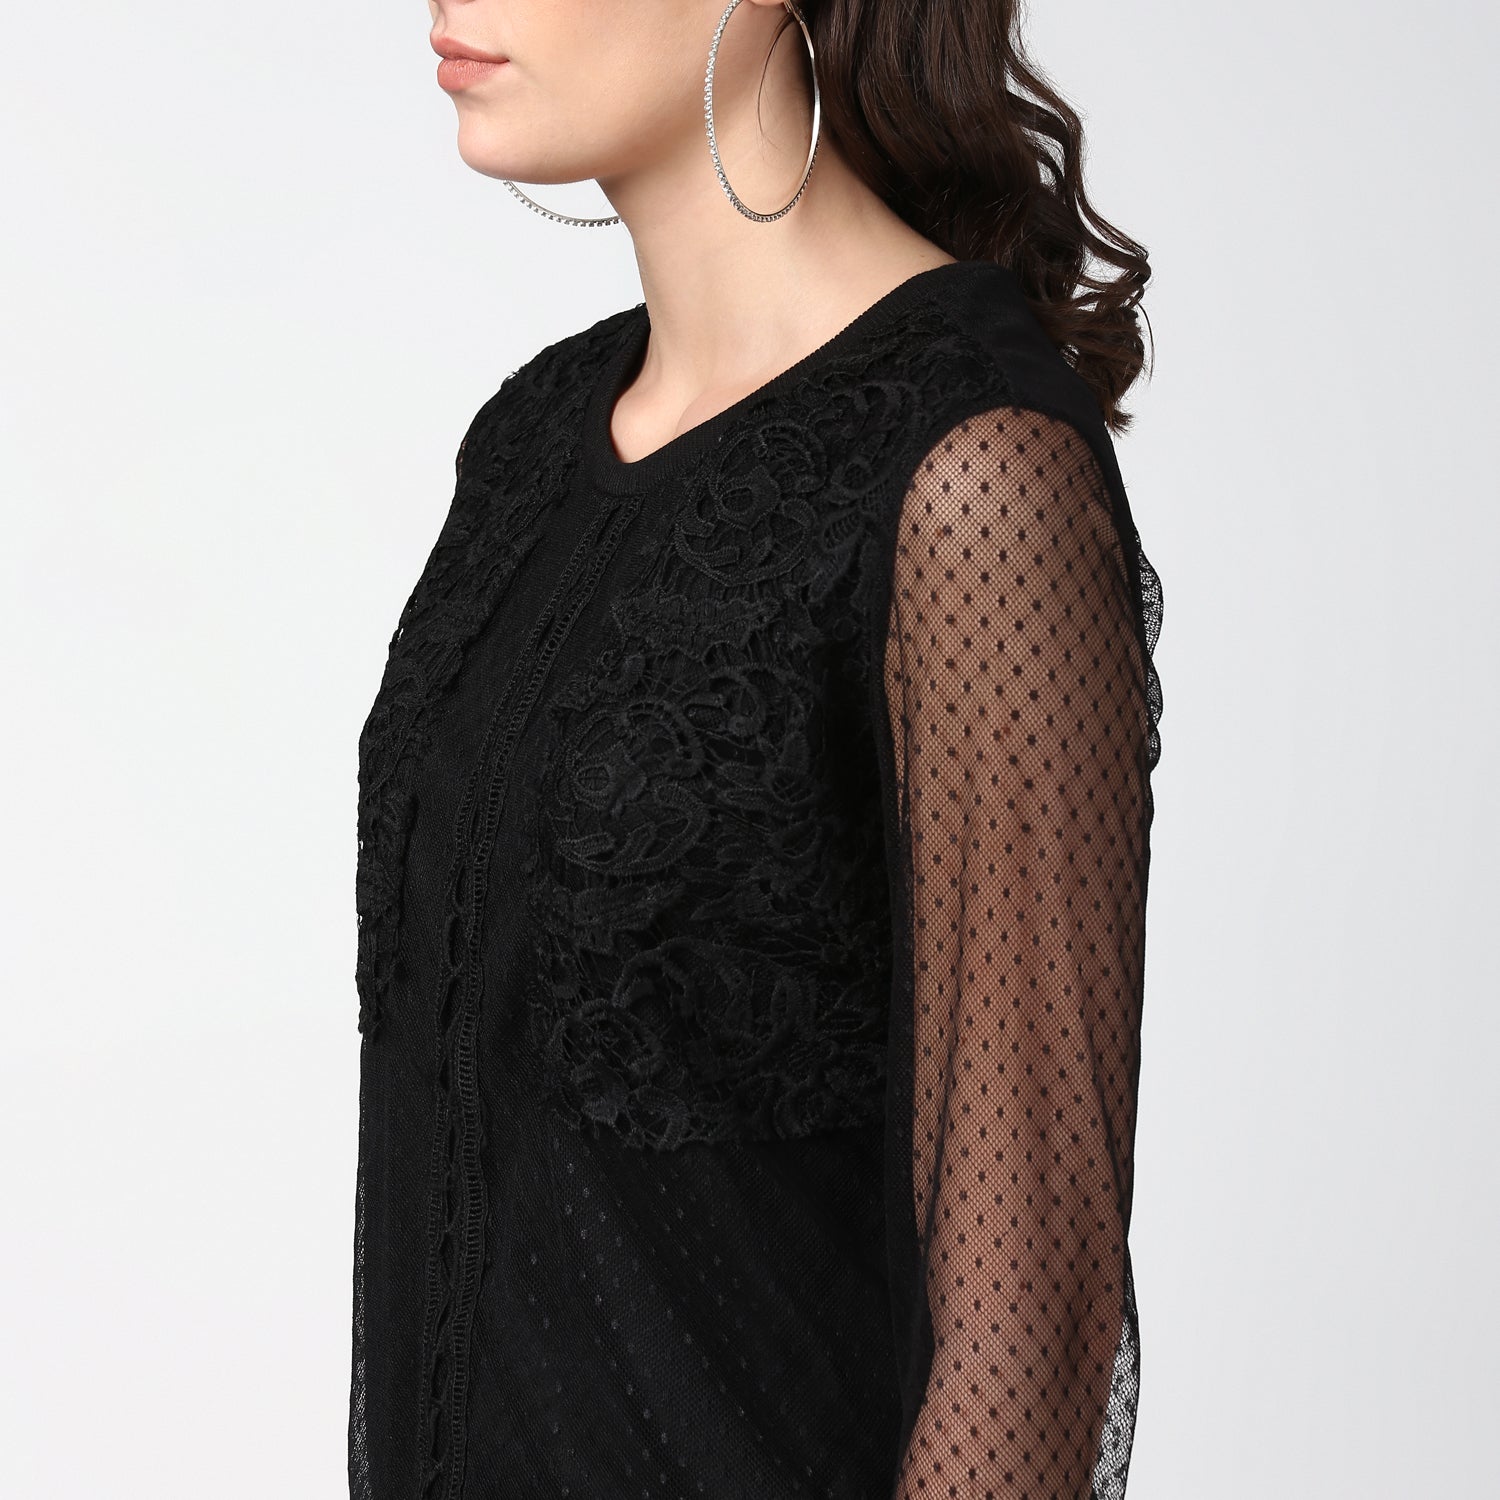 Women's Black Lace and Crochet Self Design Top - StyleStone